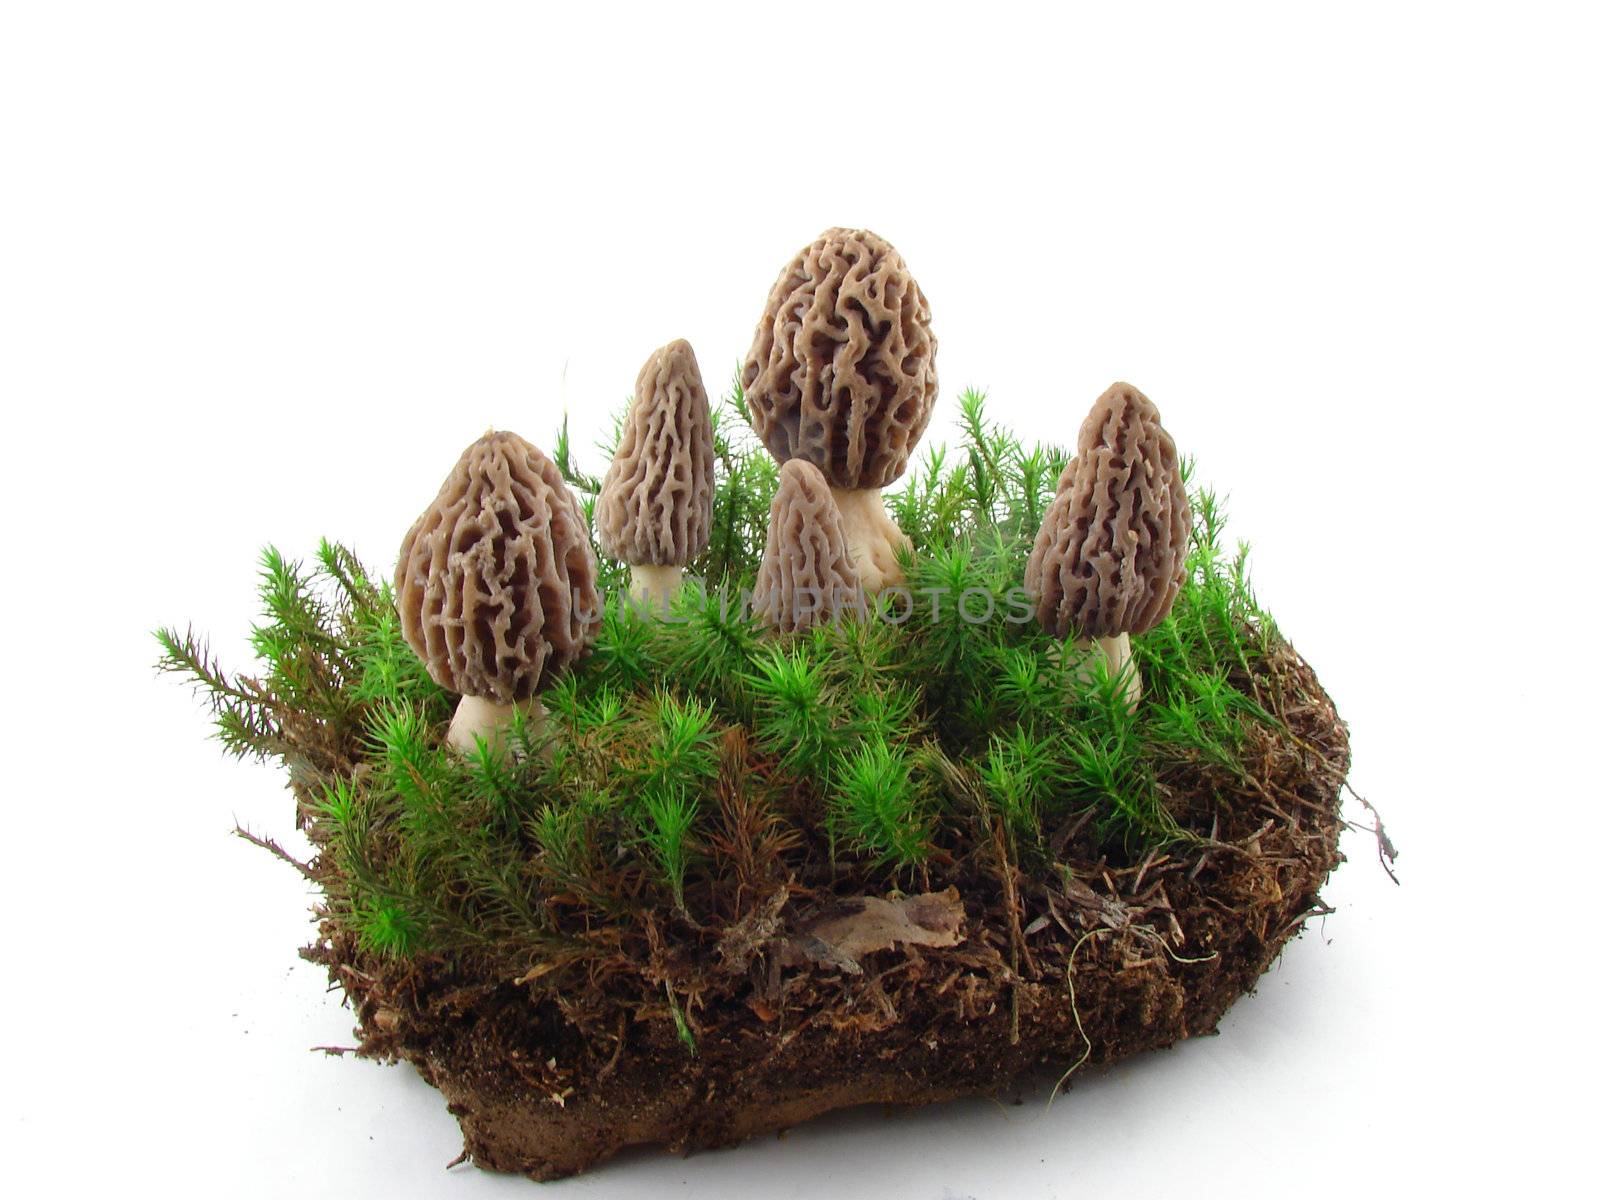 Mushrooms by morchella